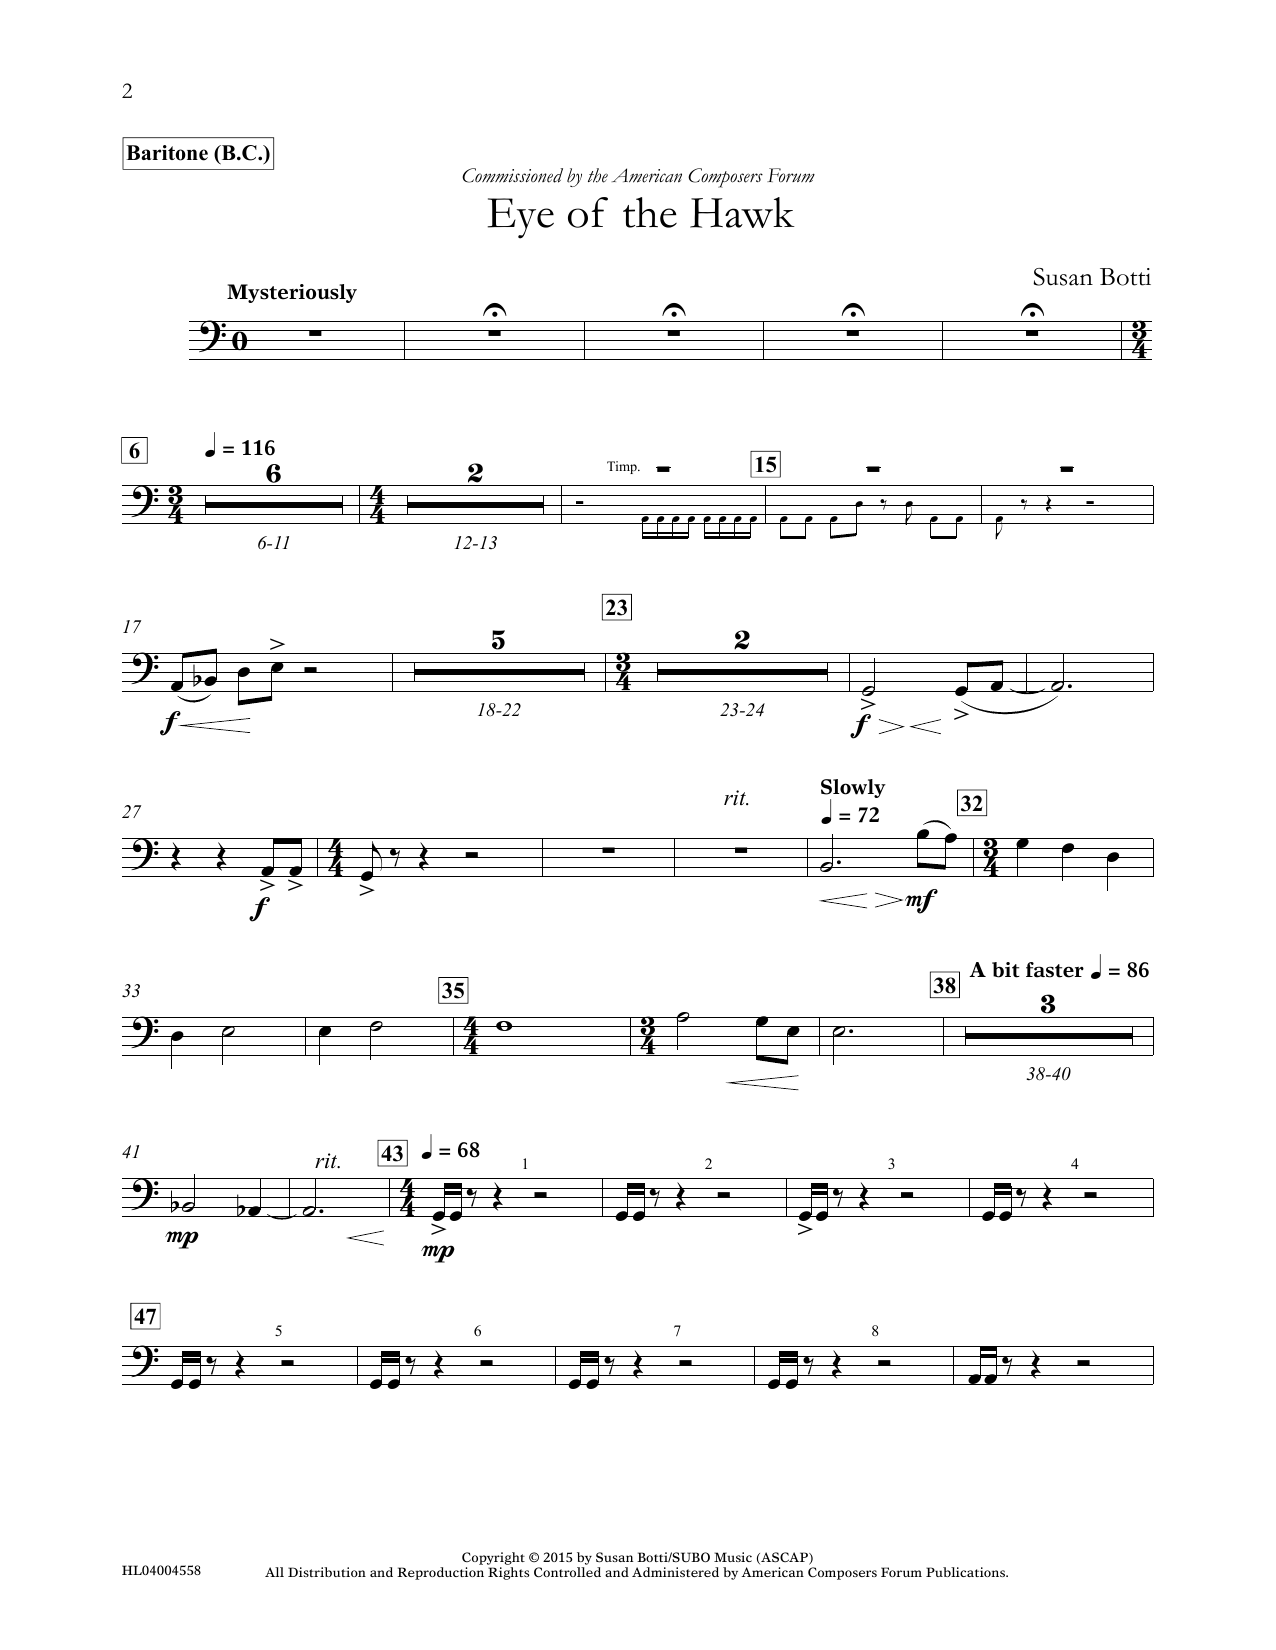 Susan Botti Eye of the Hawk - Baritone B.C. Sheet Music Notes & Chords for Concert Band - Download or Print PDF